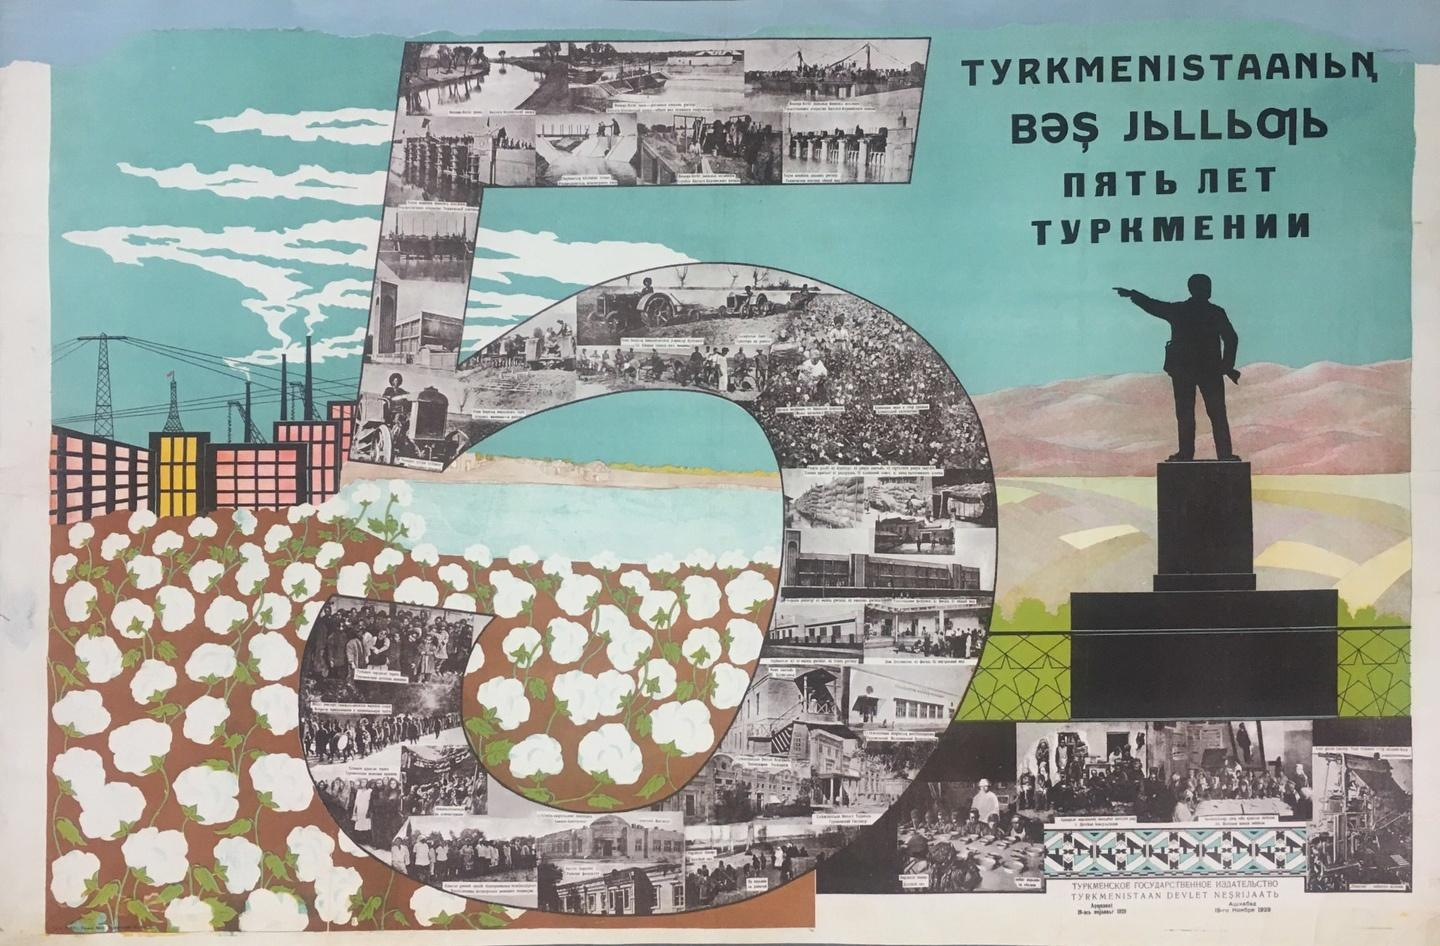 Turkmenistan poster 1929.png